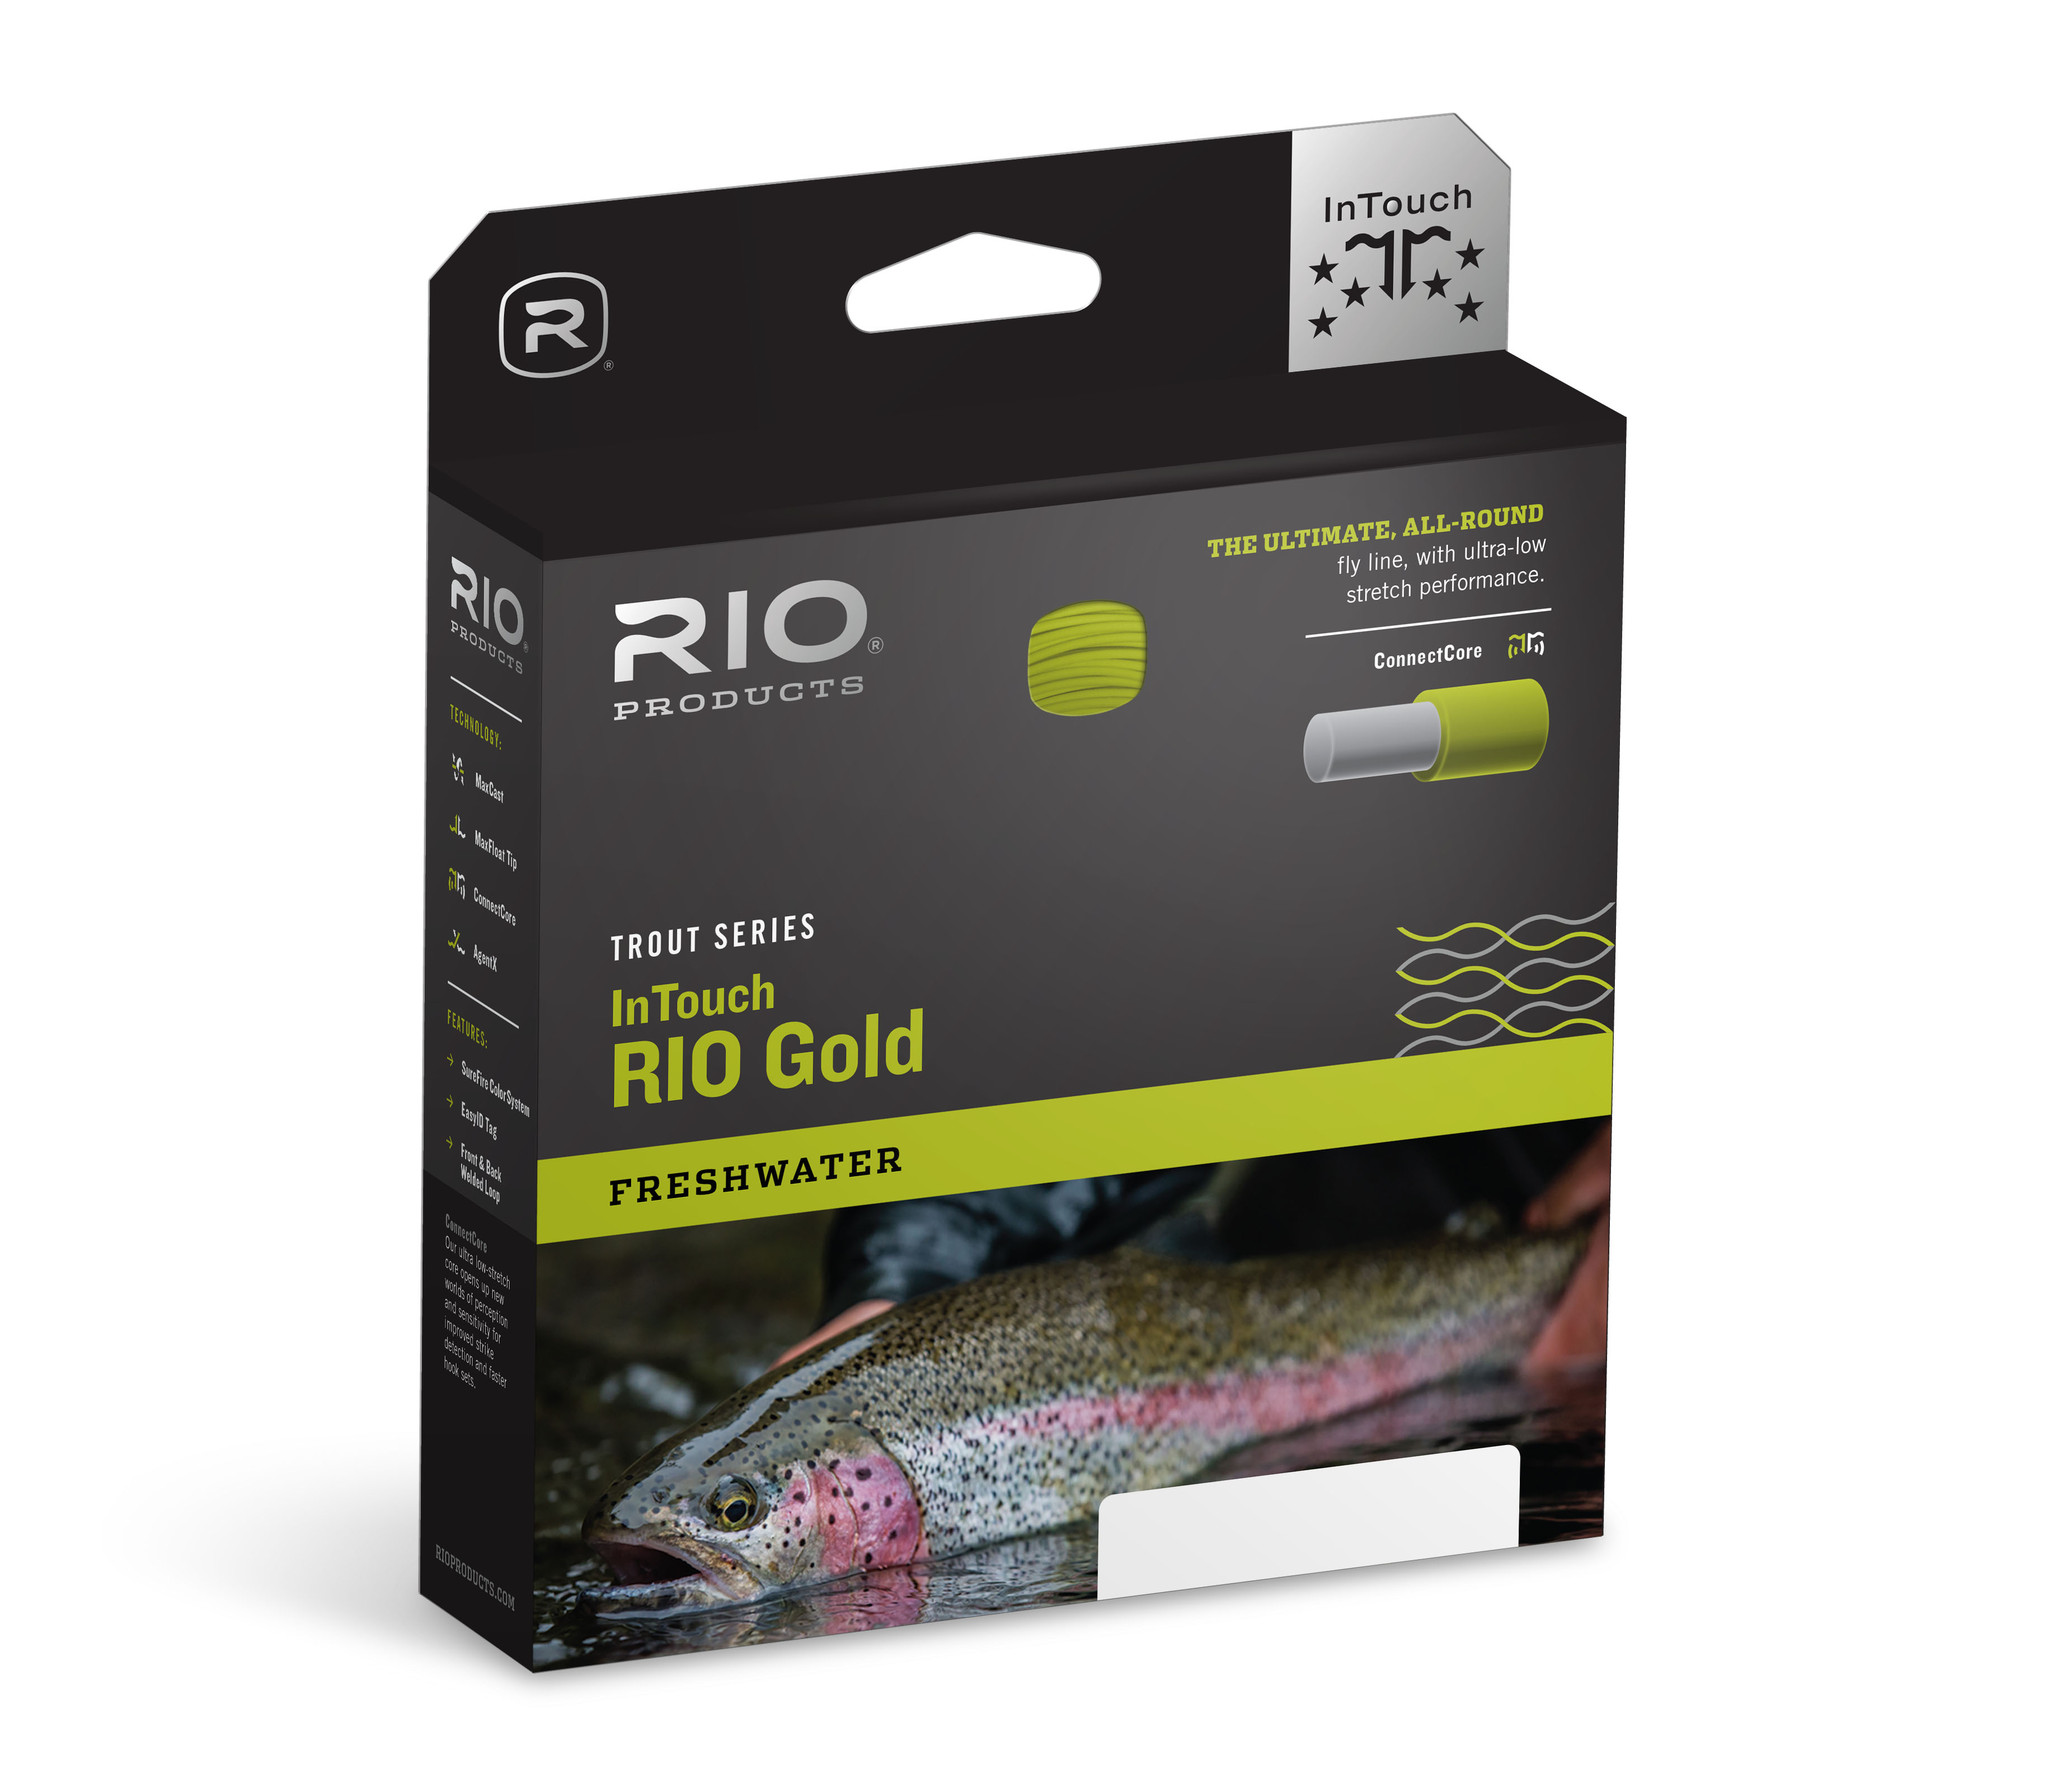 Premier RIO Perception Fly Line – Guide Flyfishing